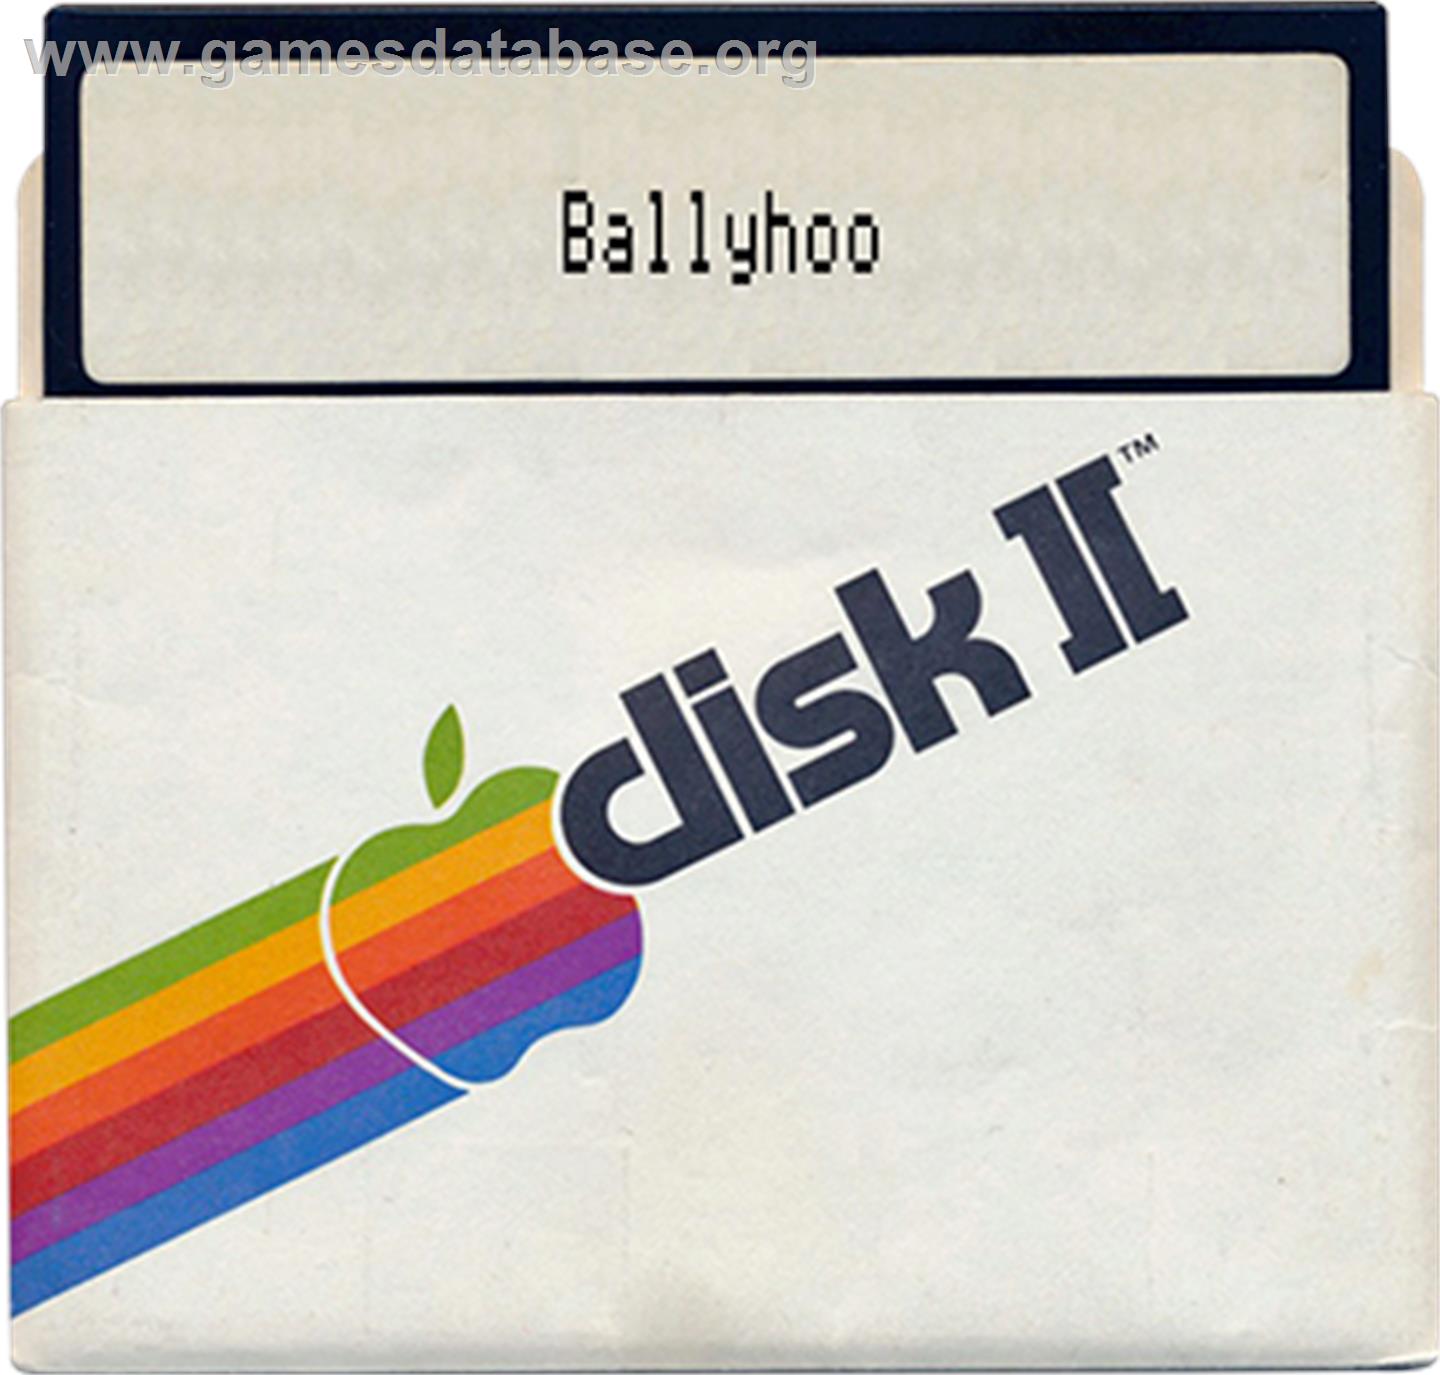 Ballyhoo - Apple II - Artwork - Disc